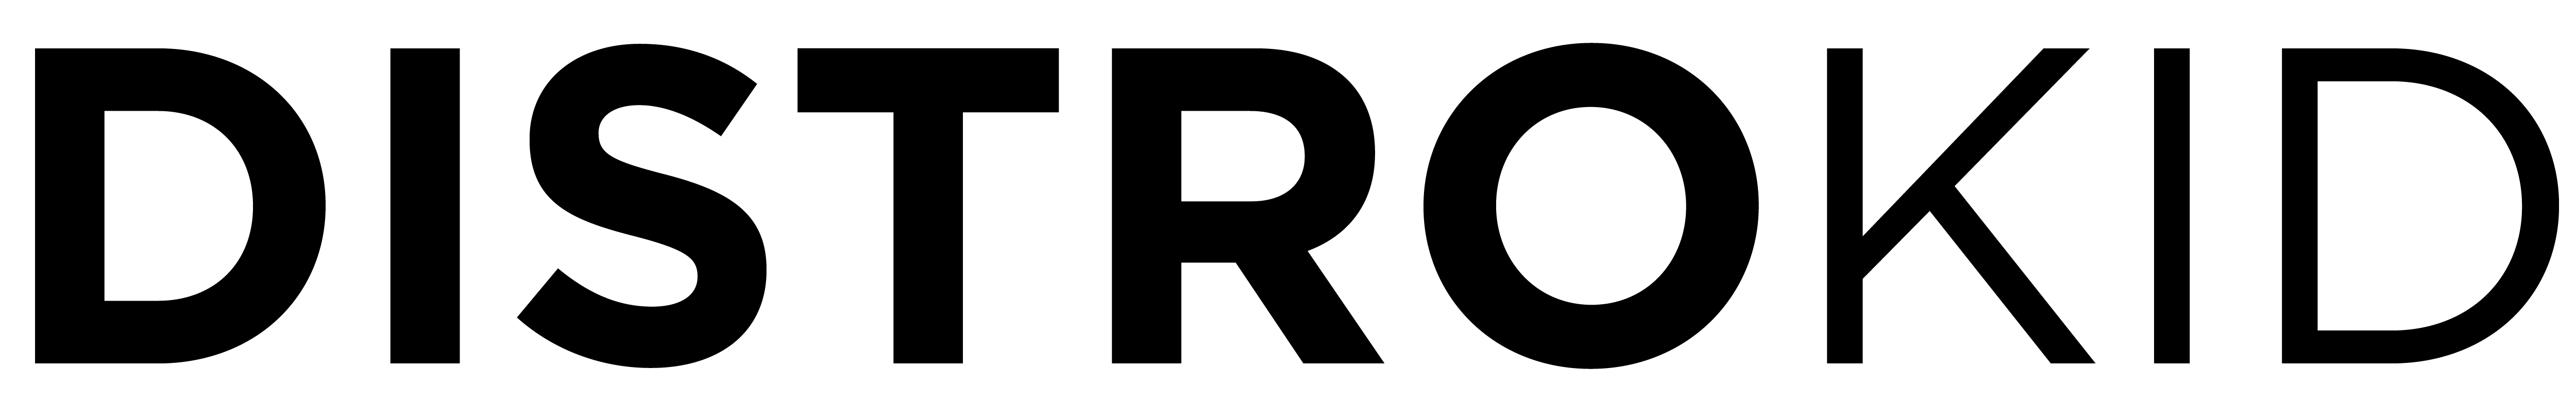 DistroKid logo in black